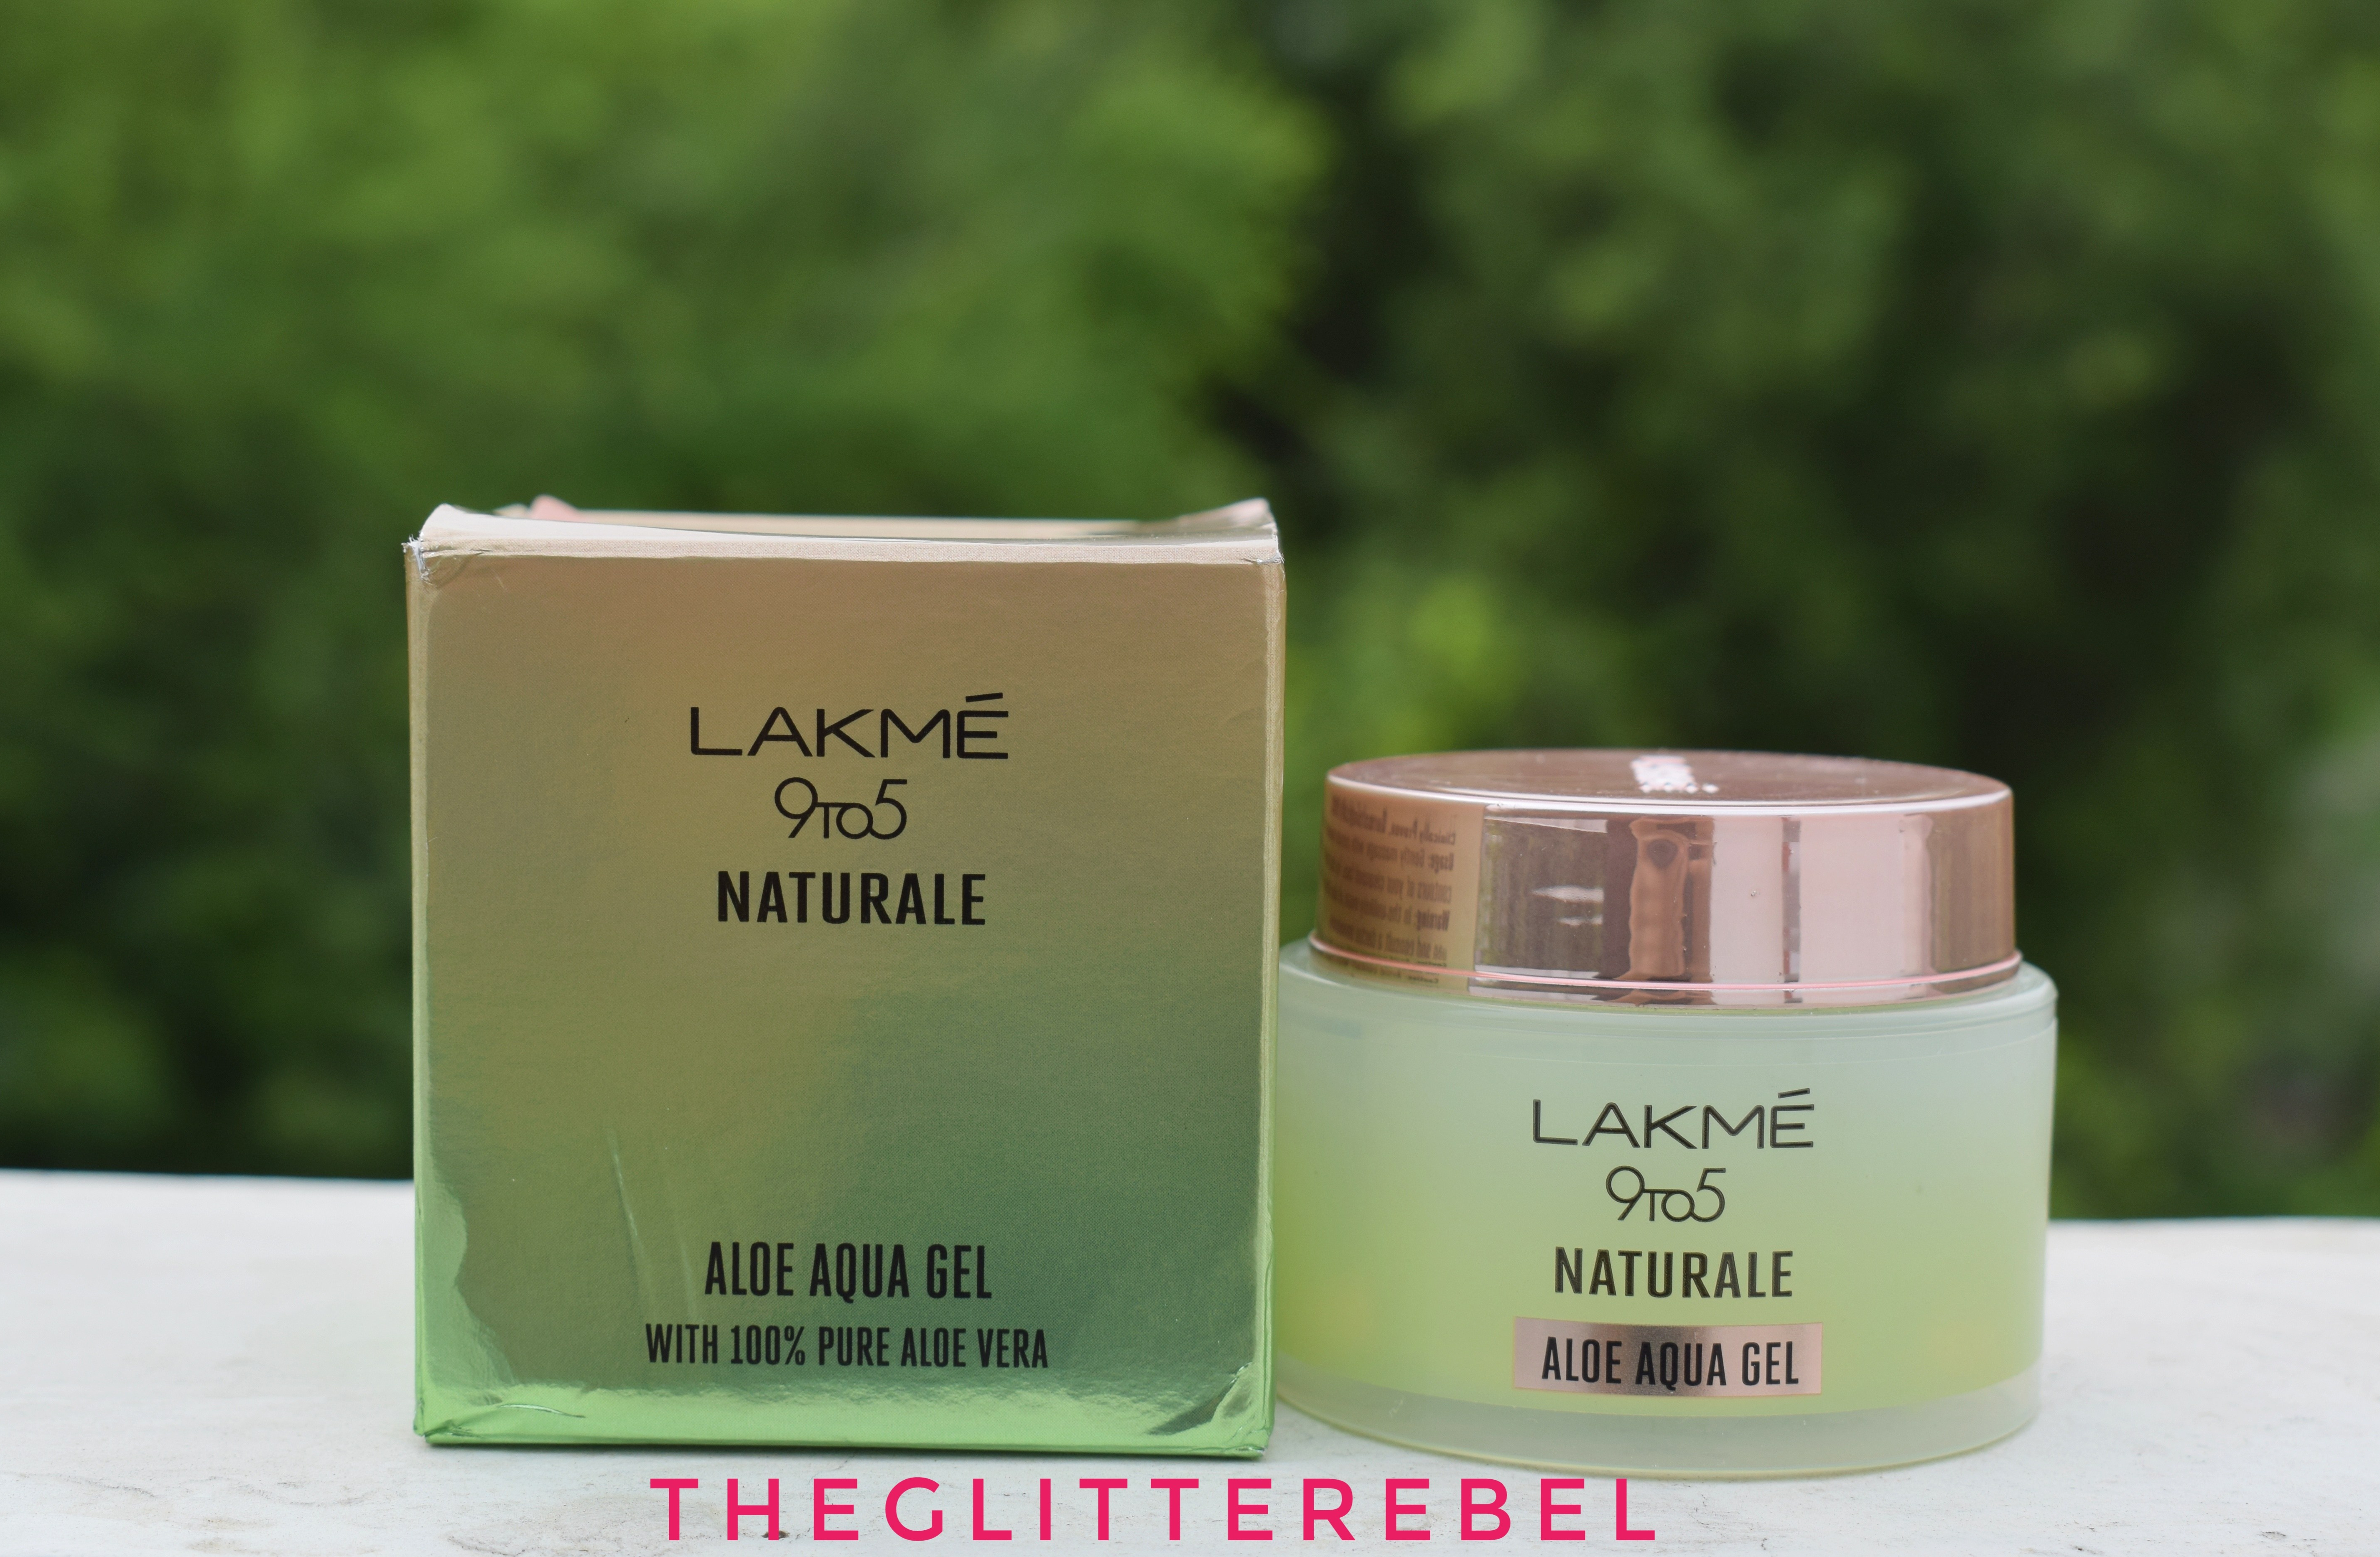 Lakme 9to5 Naturale Aloe Aqua Gel With 100 Pure Aloe Vera Review The Glitter Rebel